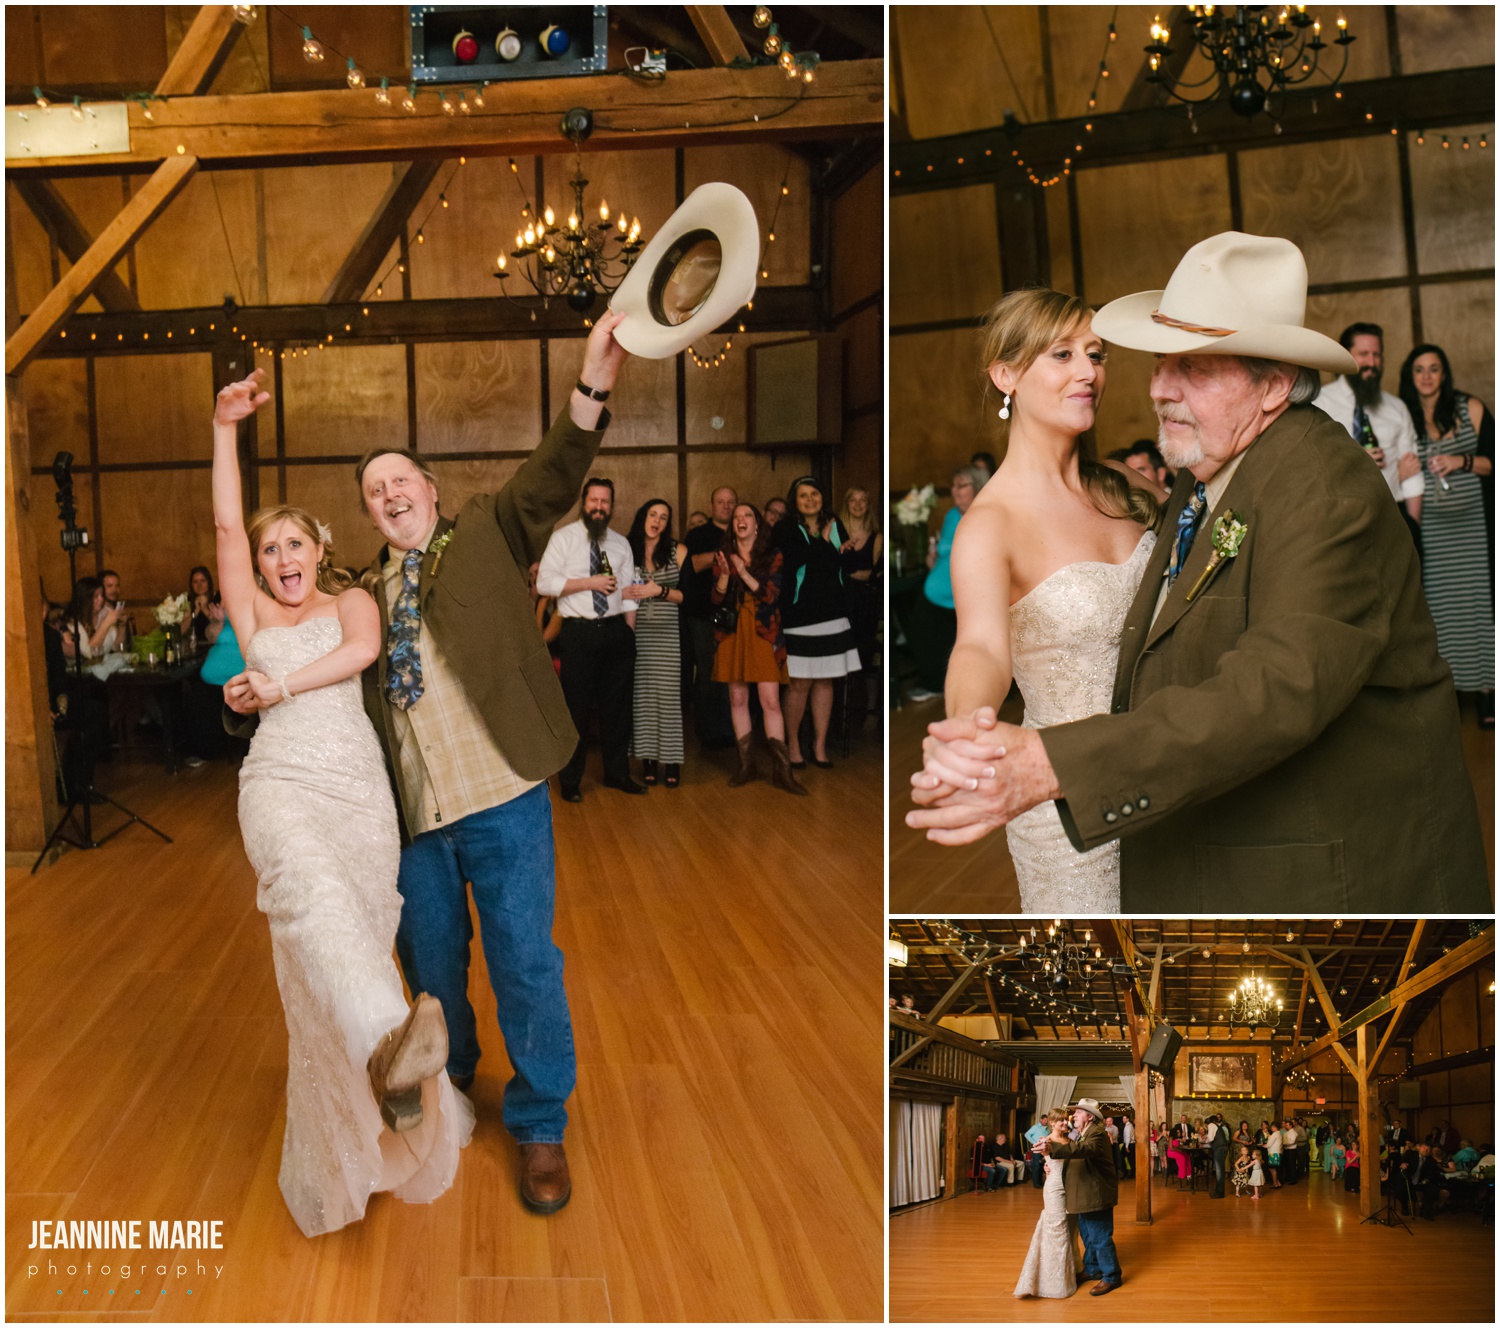 Hope Glen Farm, Twin Cities wedding venues, Minnesota farm weddings, Jeannine Marie Photography, Minneapolis wedding photographer_1824